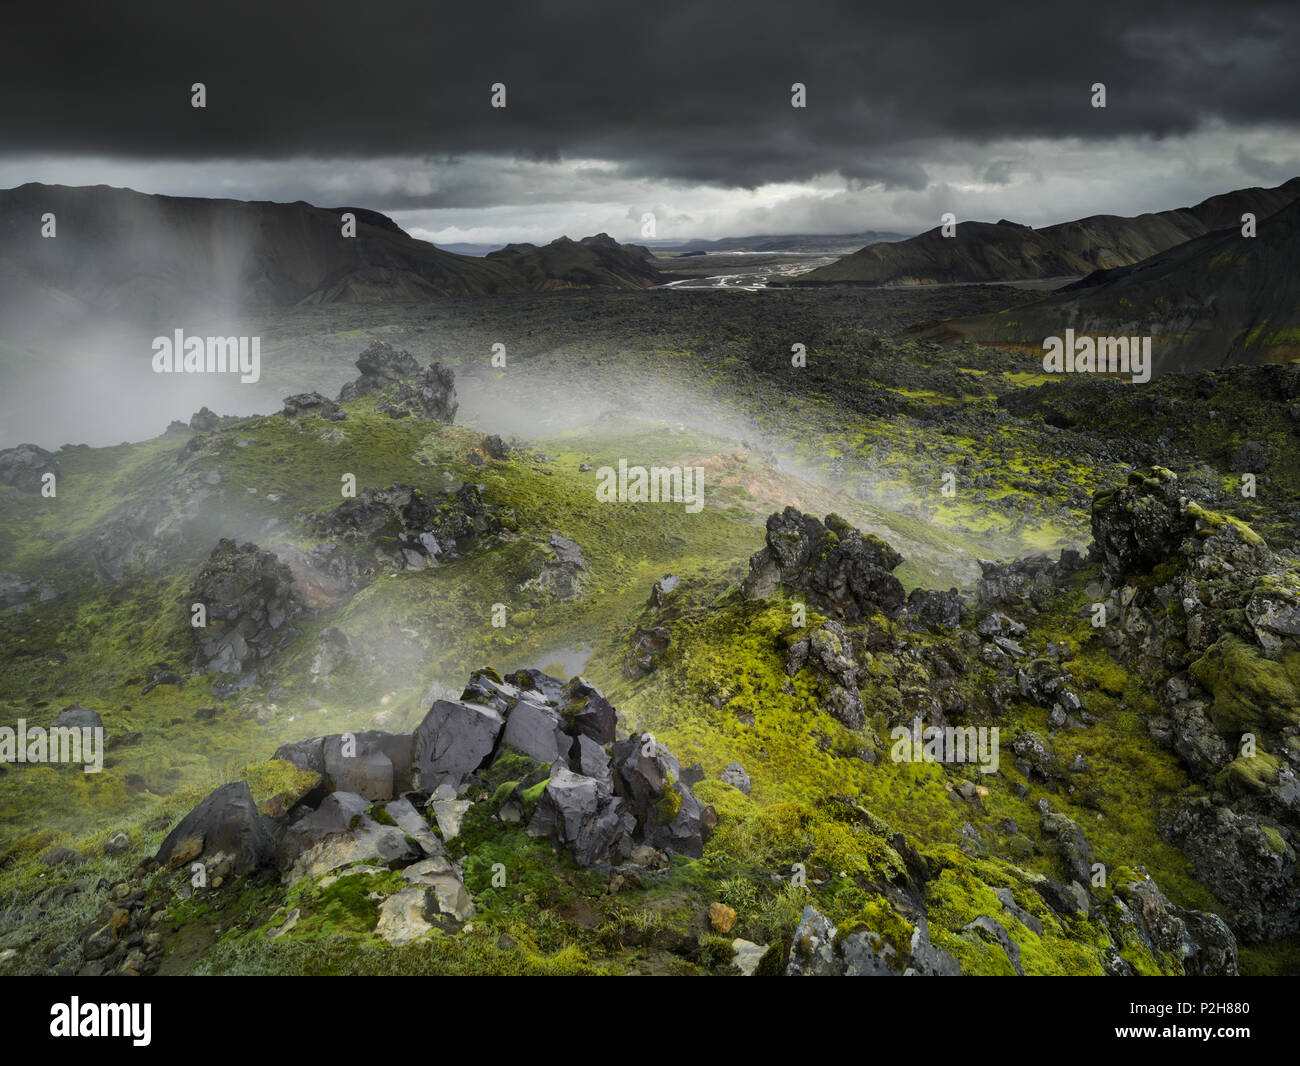 Vapour rising, Volcanic landscape with moss and stone, Landmannalaugar, Island Stock Photo